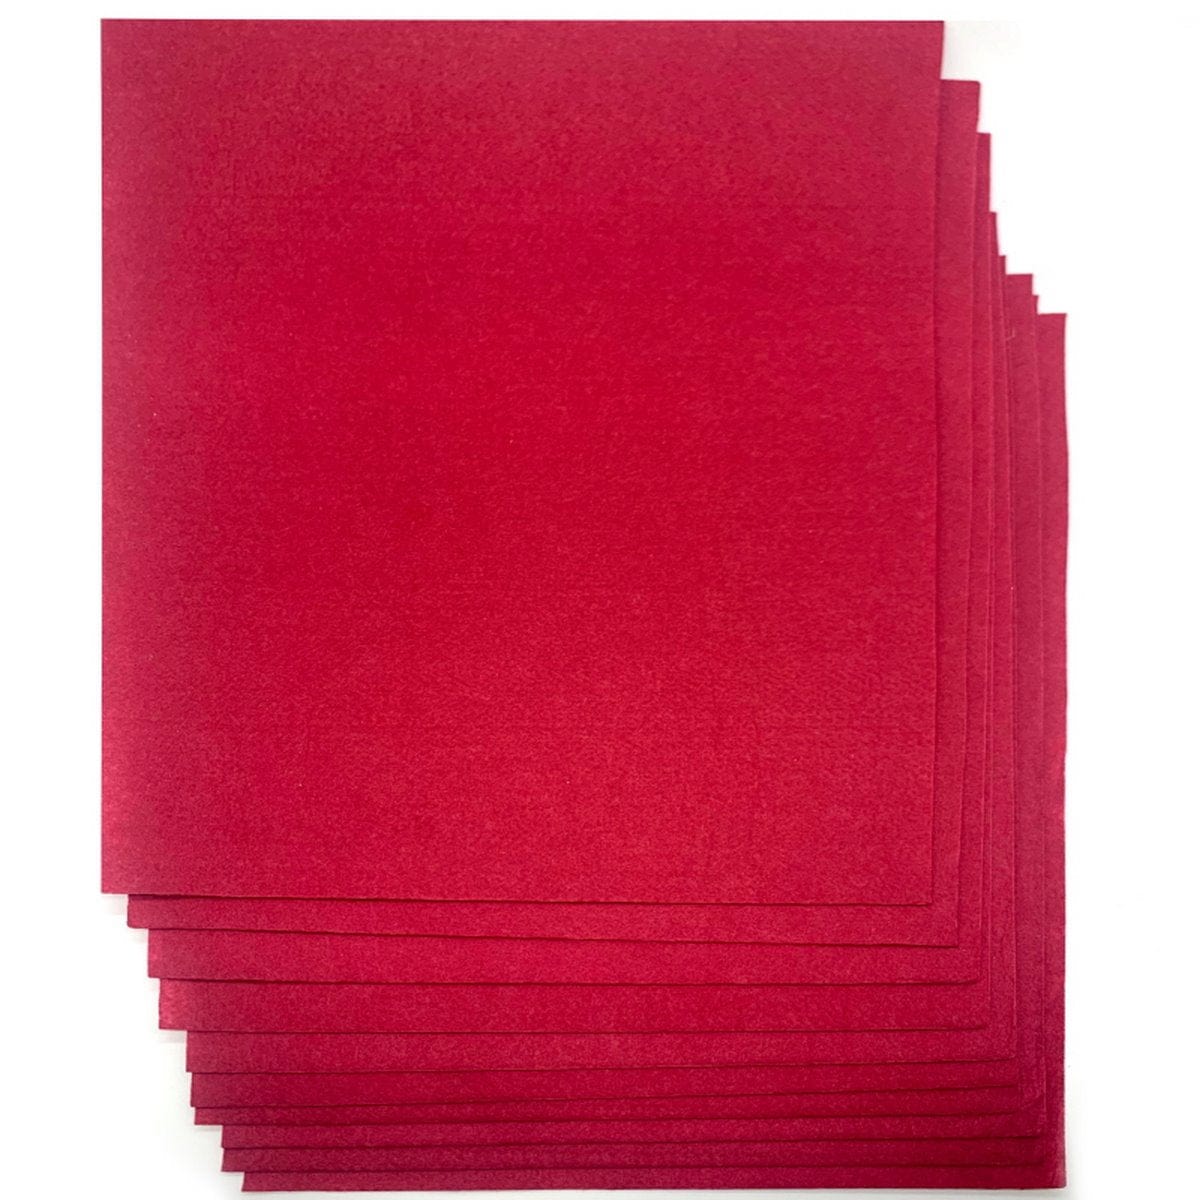 jags-mumbai Non-Woven & Felt Sheets A3 Nonwoven Felt Sheet Red 050 A3RD050